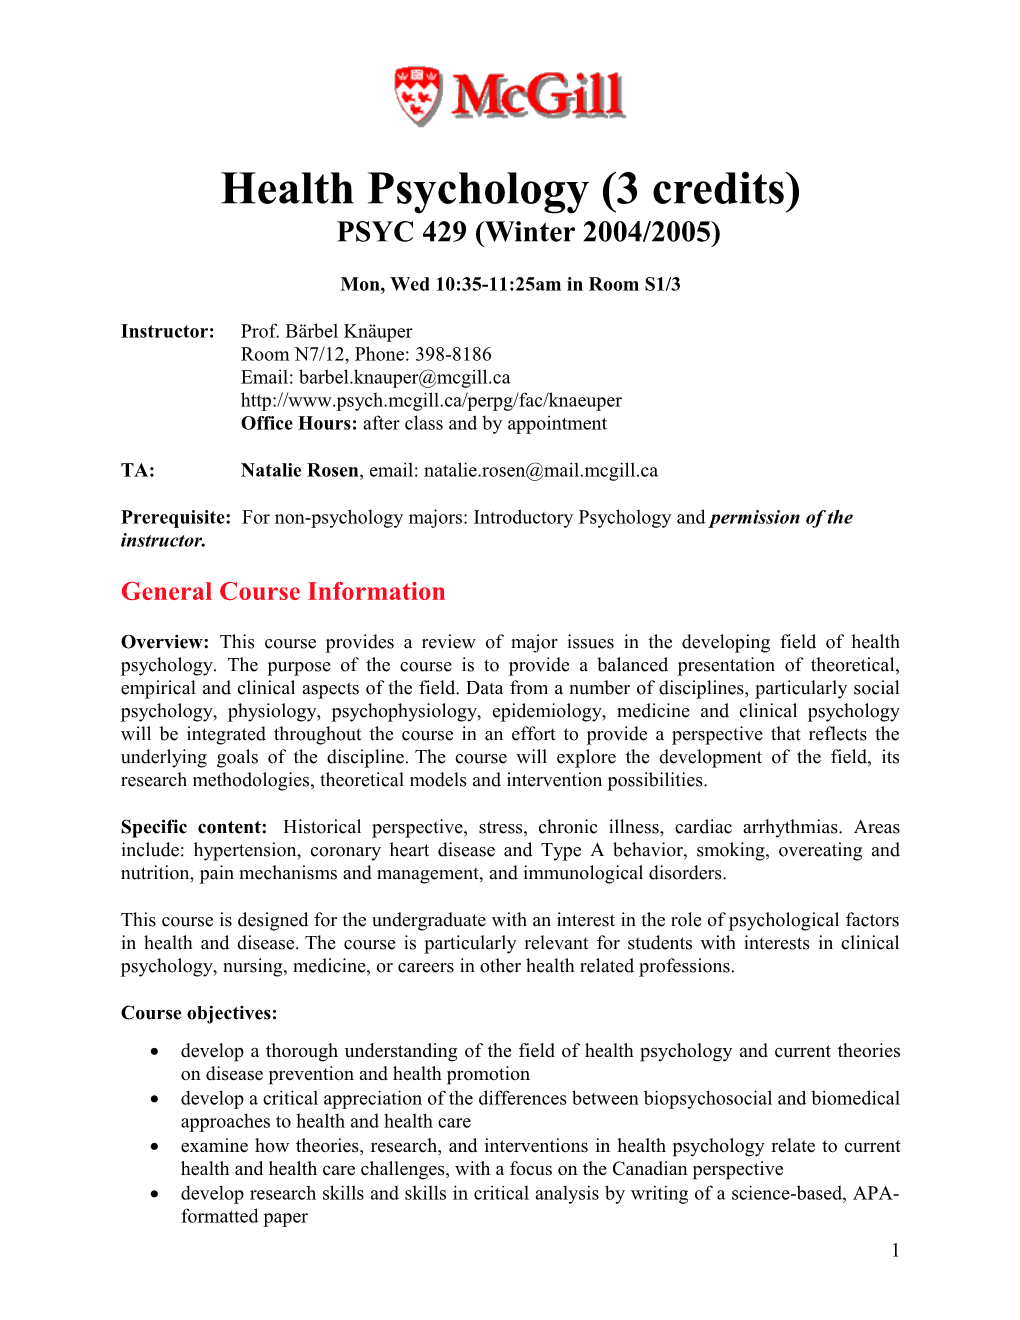 Health Psychology (3 Credits)PSYC 429 (Winter 2004/2005)